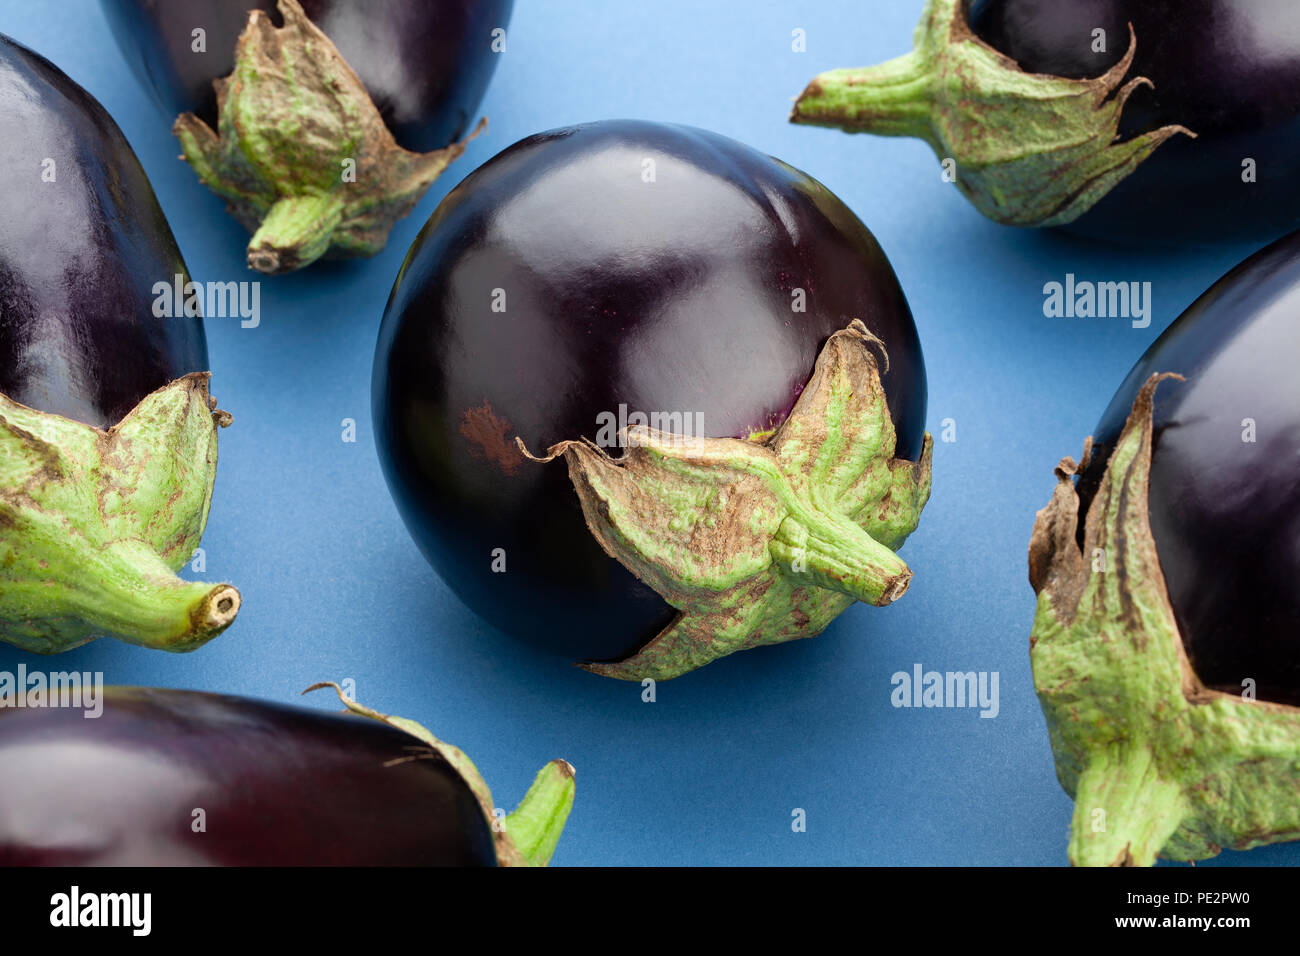 round eggplant closeup on blue backgroun Stock Photo